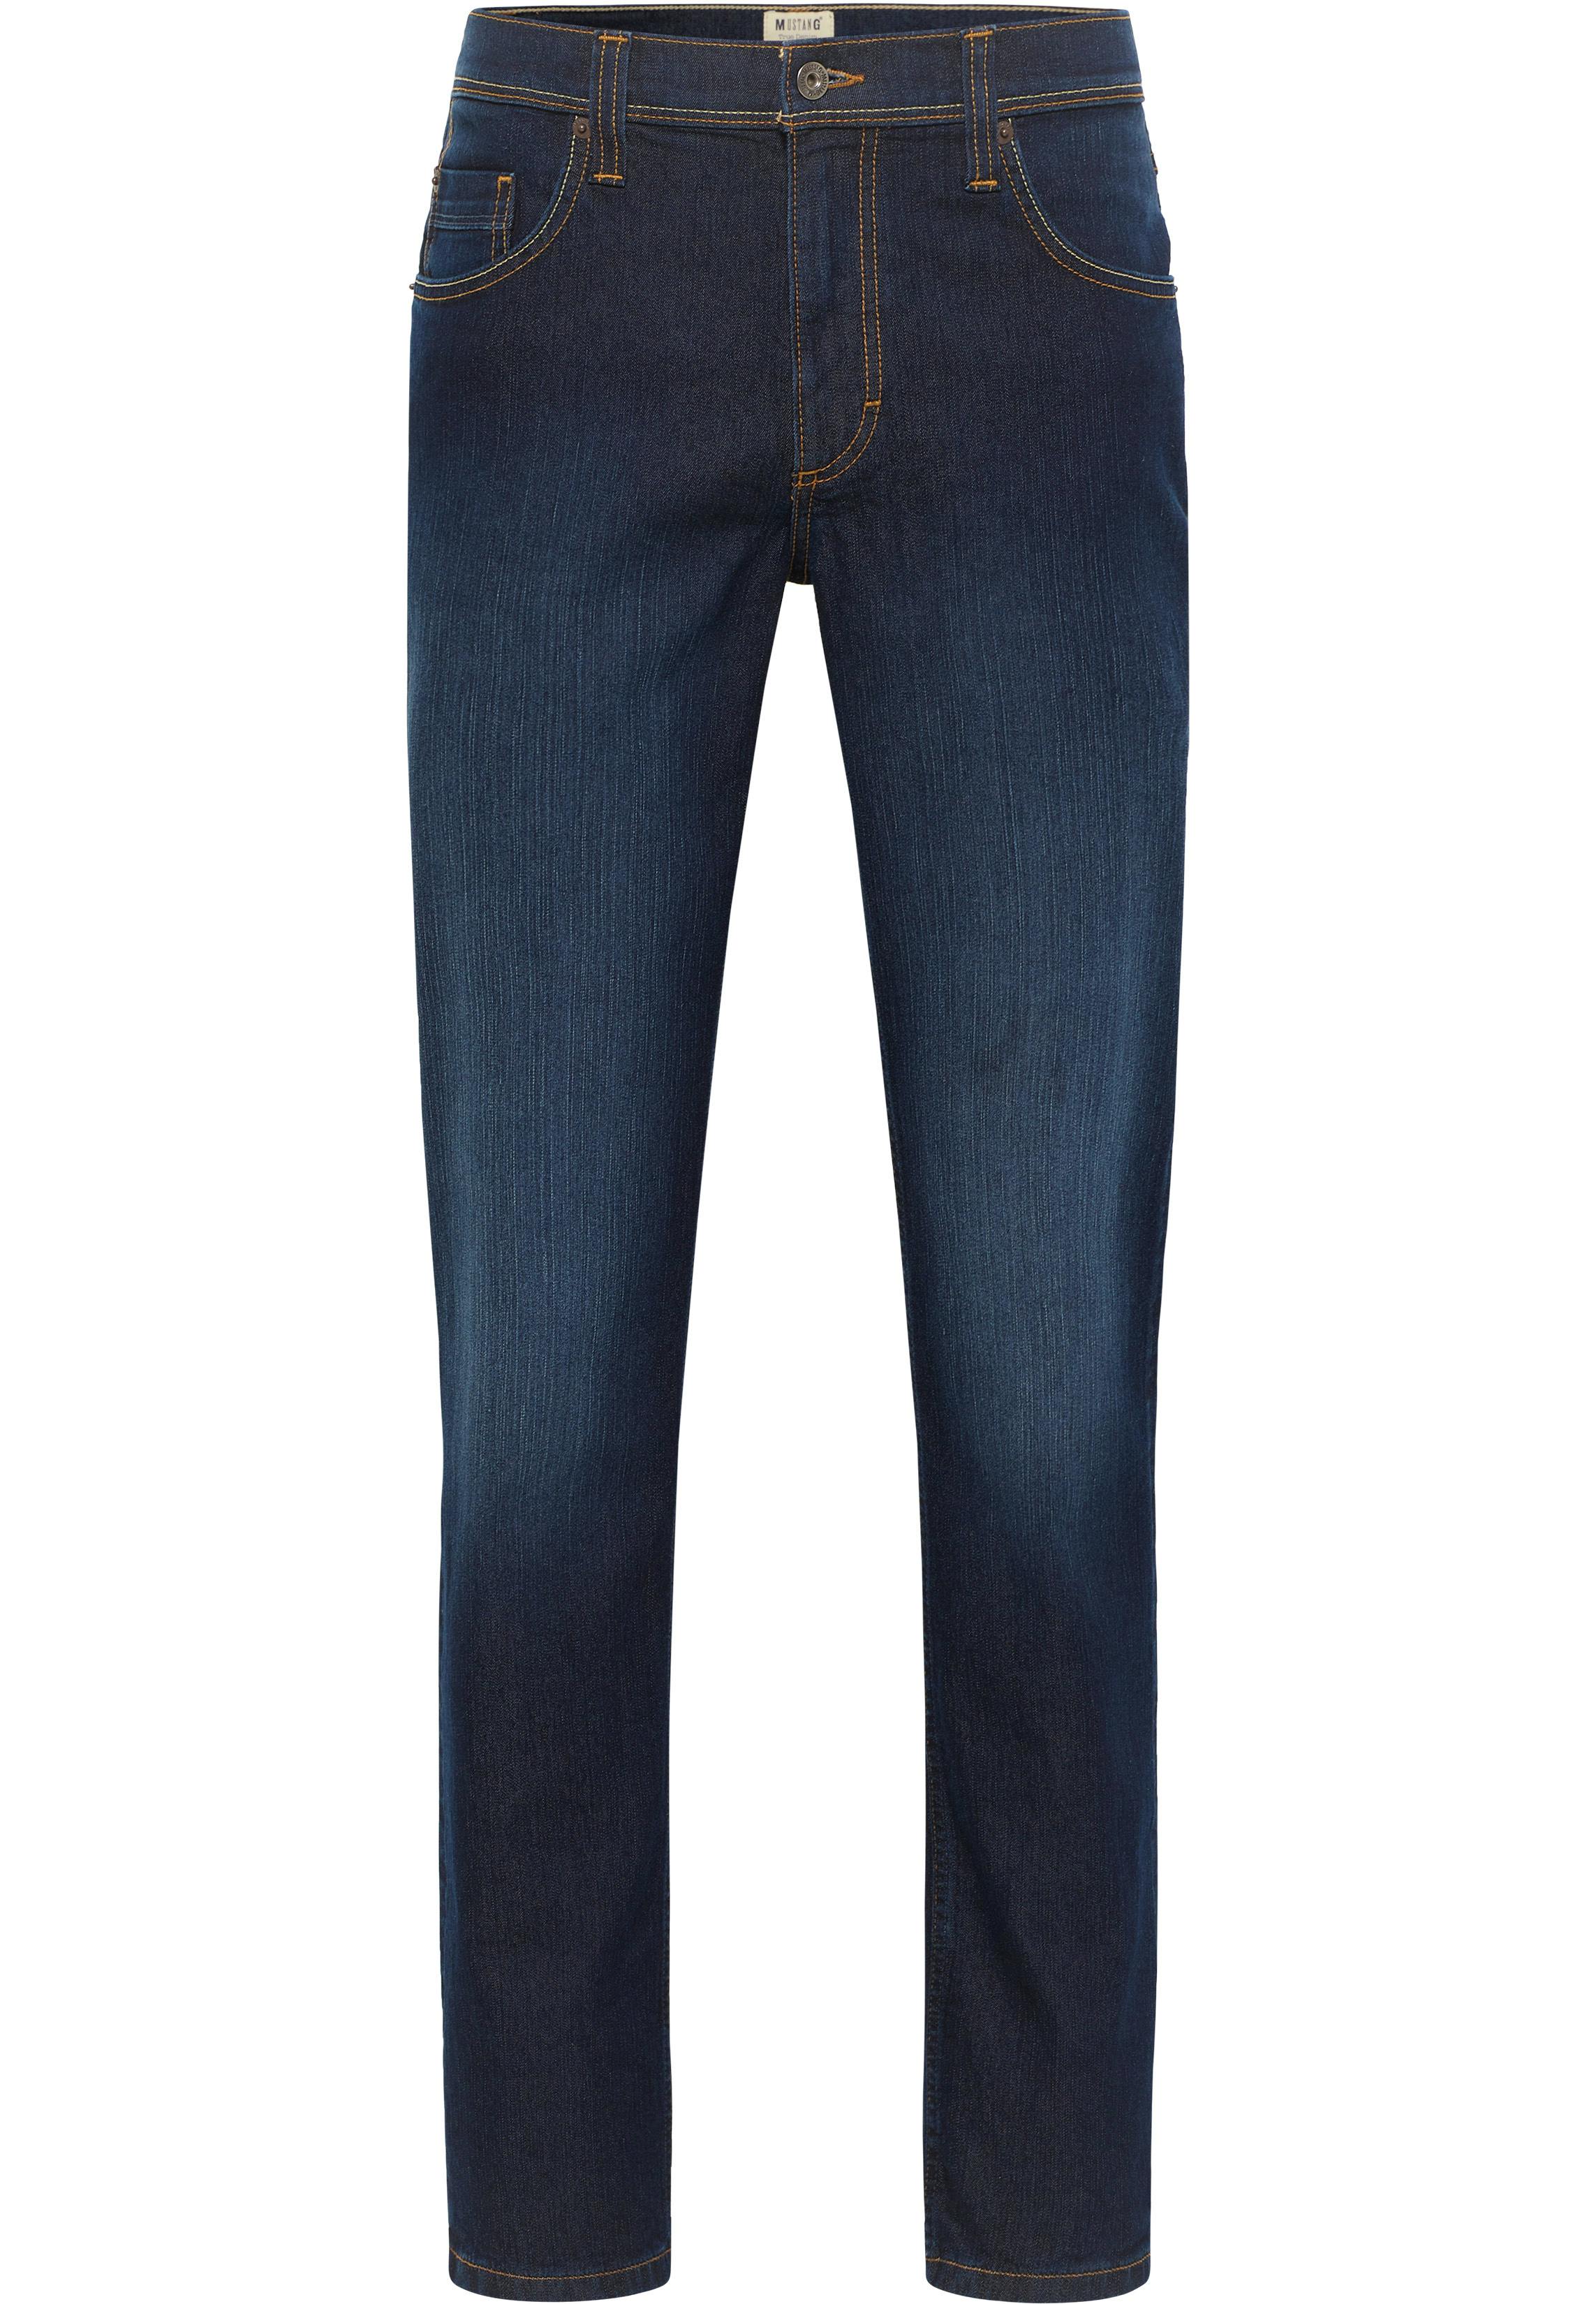 mustang jeans washington slim medium straight extra lang blue wash uomo